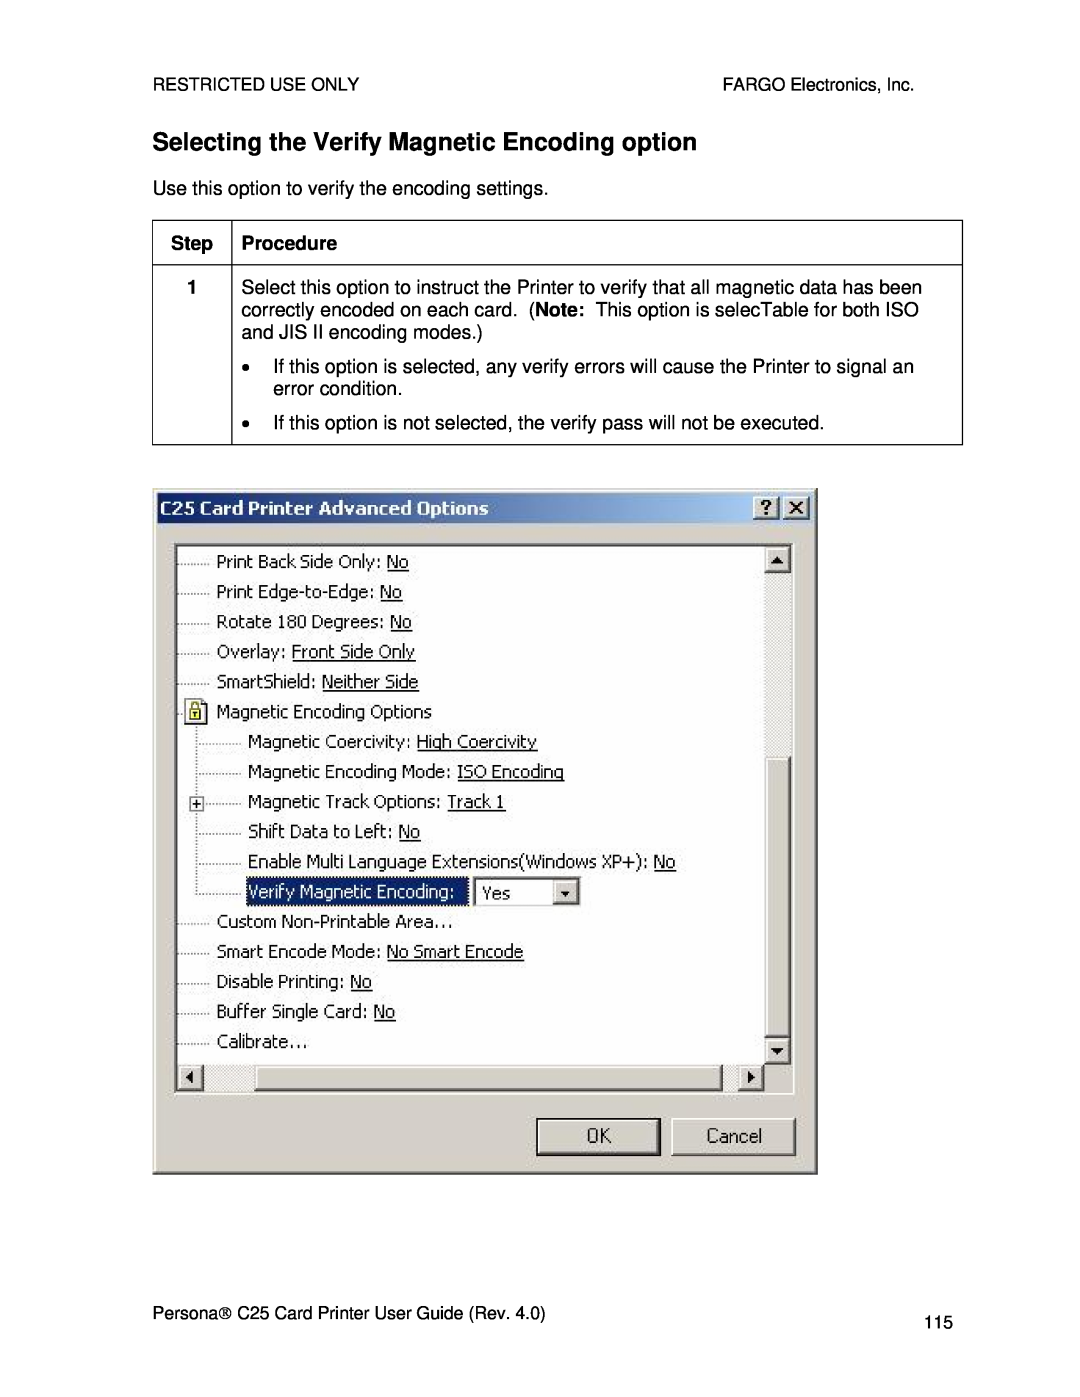 FARGO electronic S000256 manual Selecting the Verify Magnetic Encoding option 